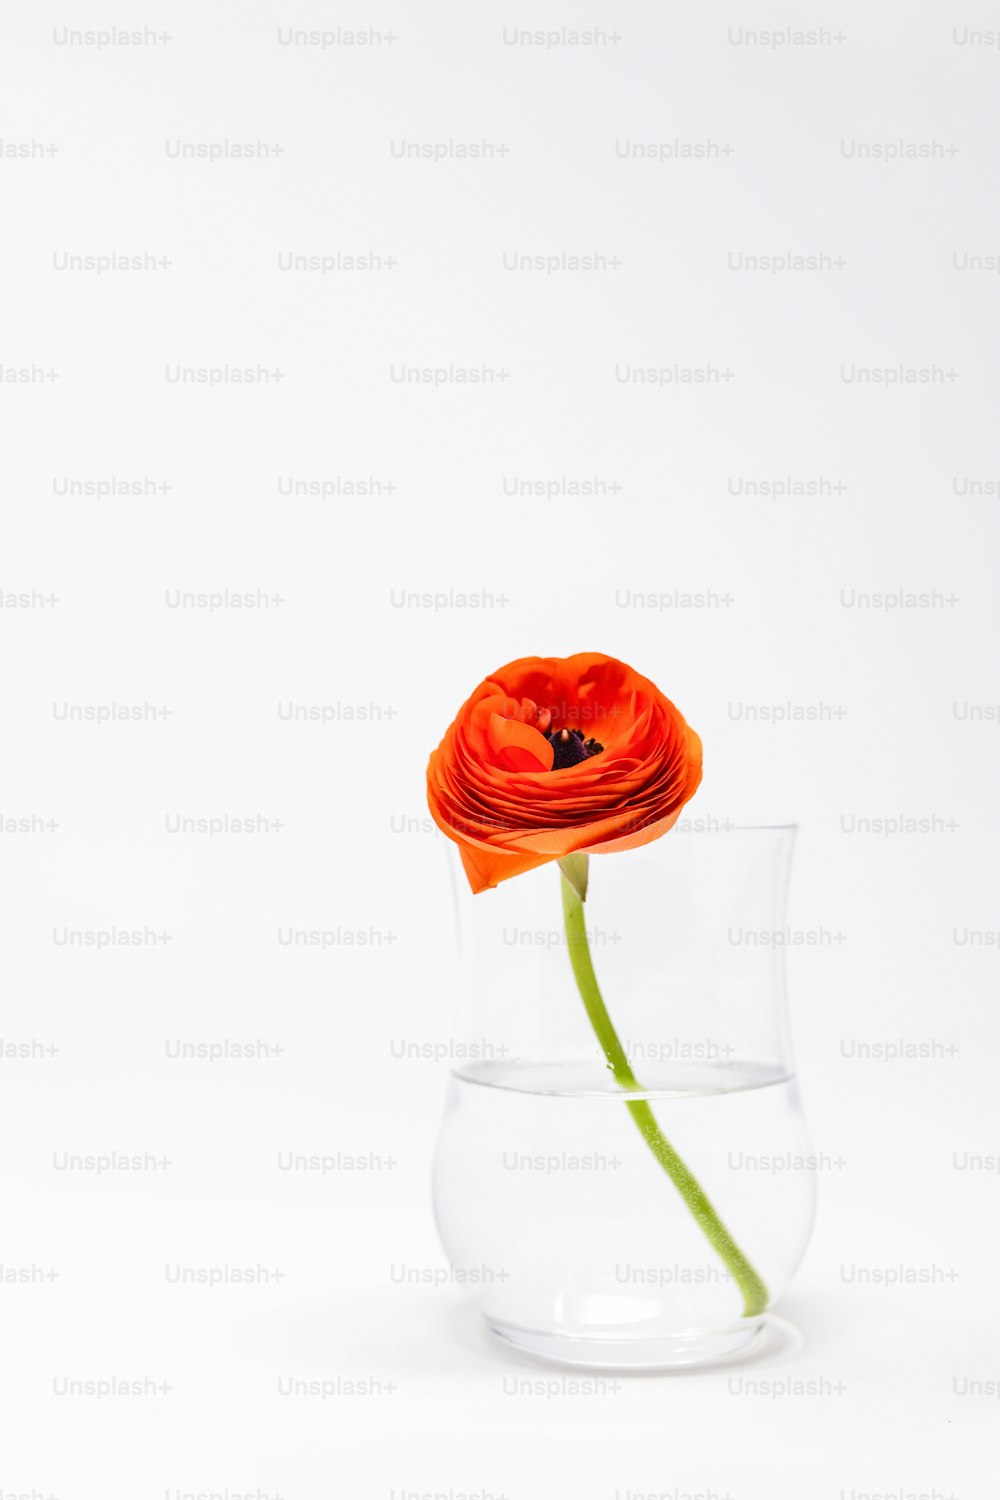 una flor naranja en un jarrón de vidrio lleno de agua